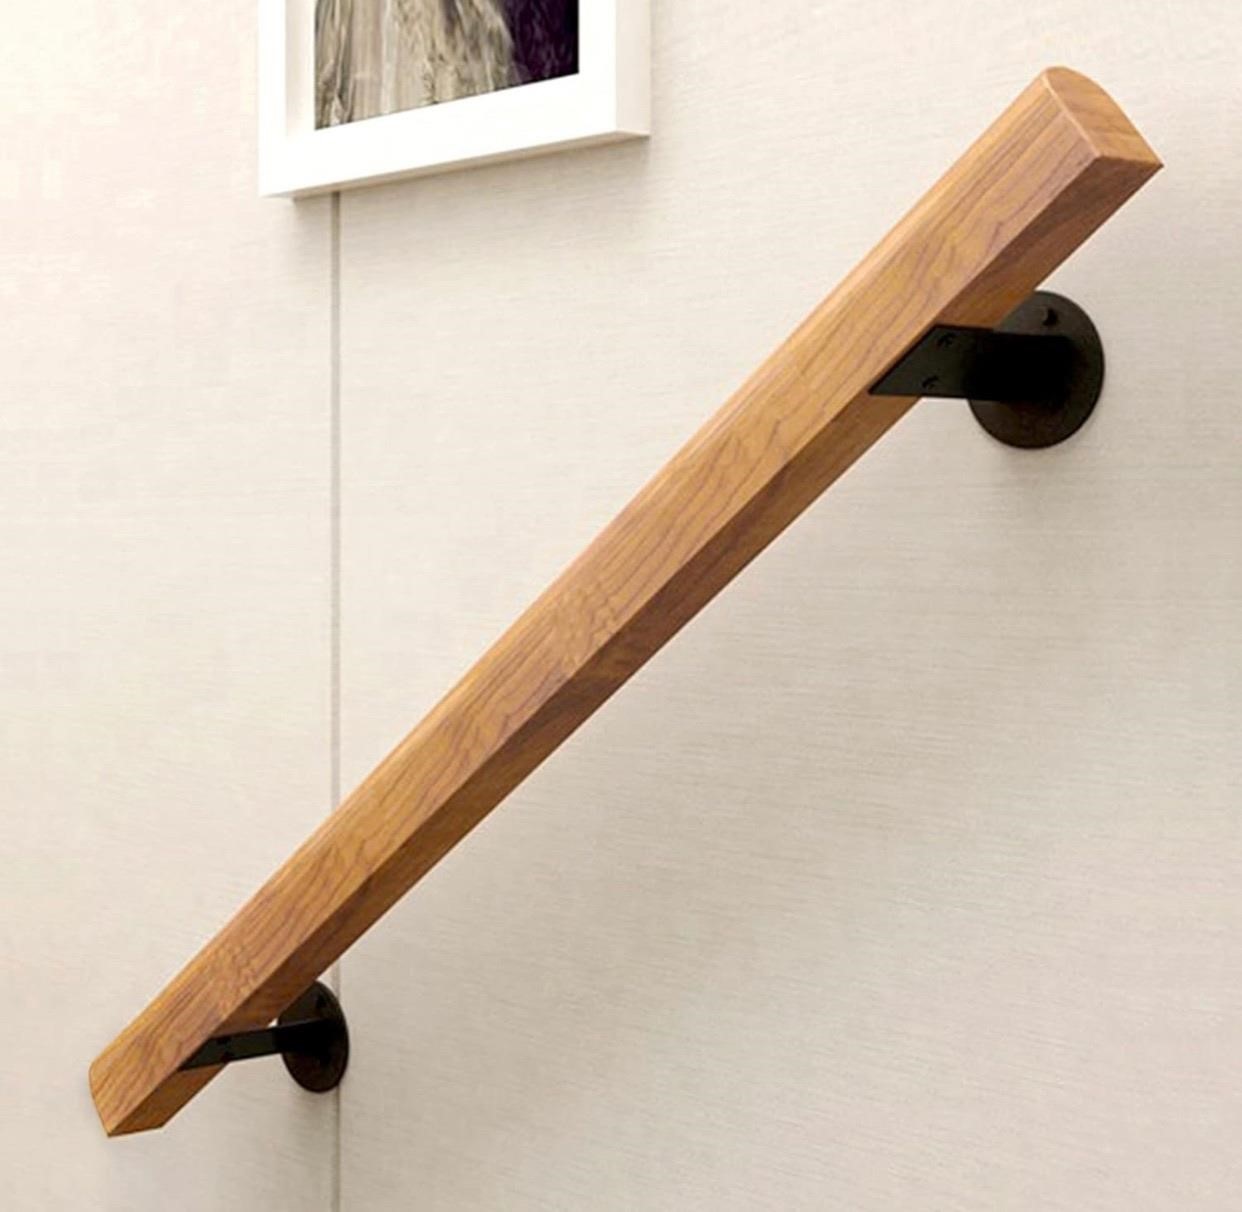 $150 (4') Wooden Stair Handrail